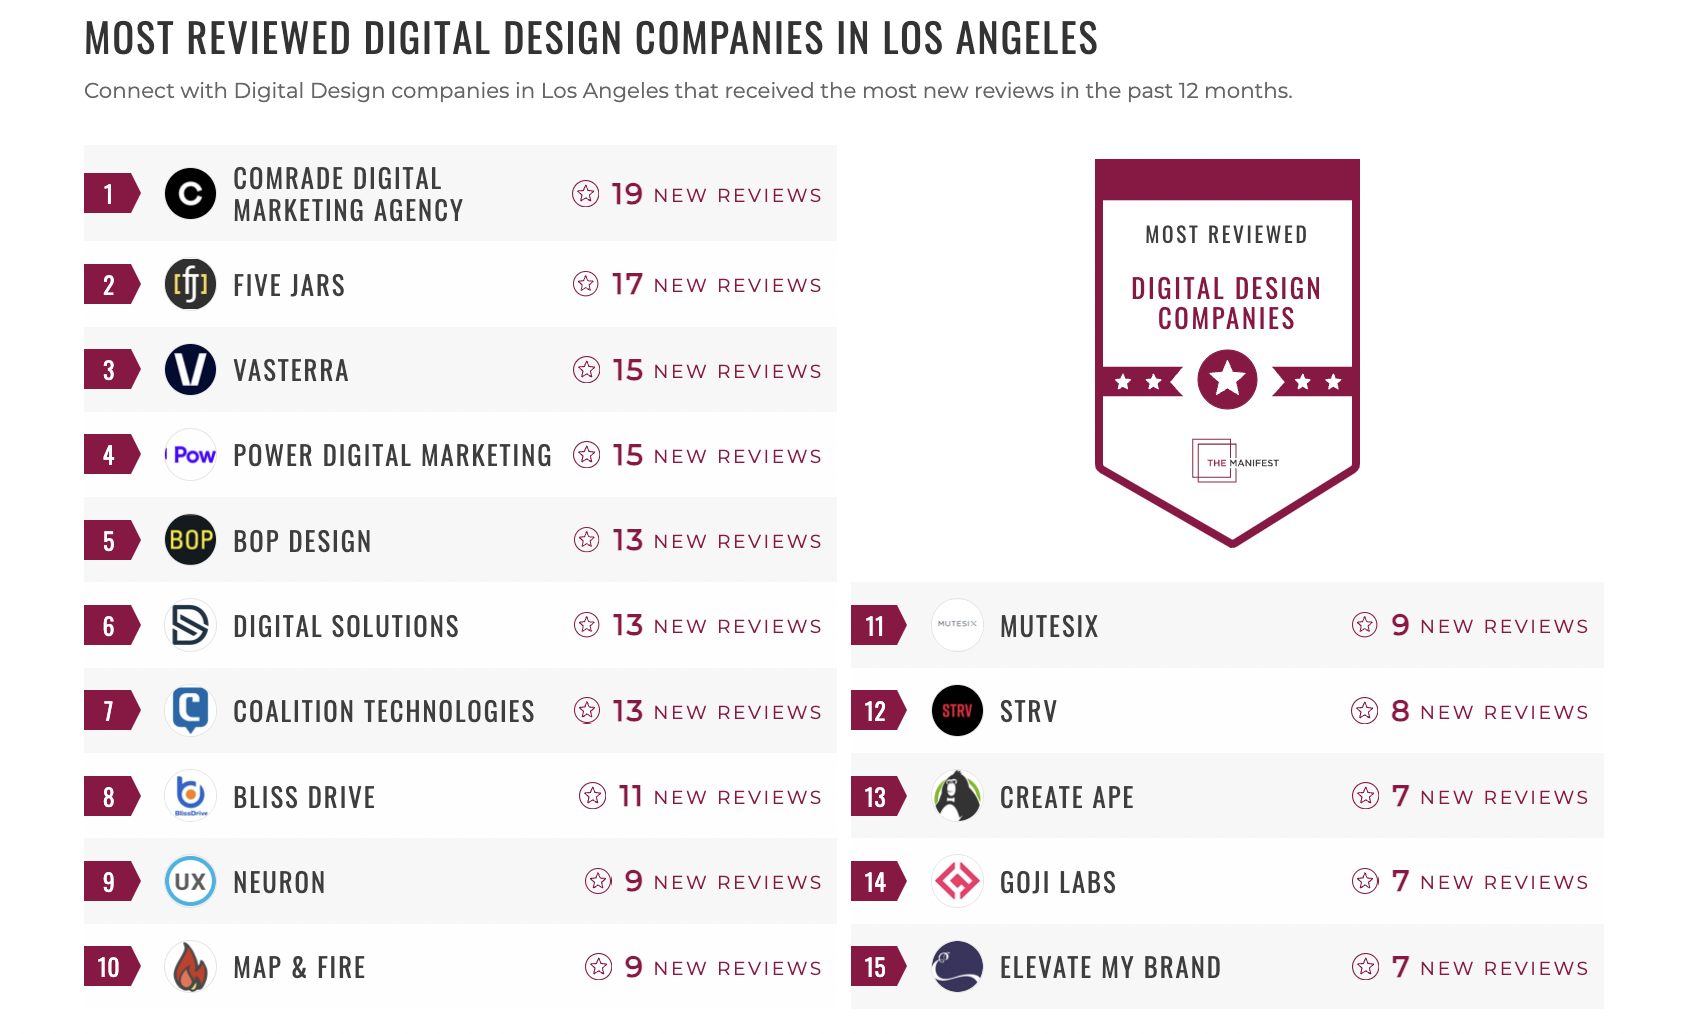 Digital Design Companies